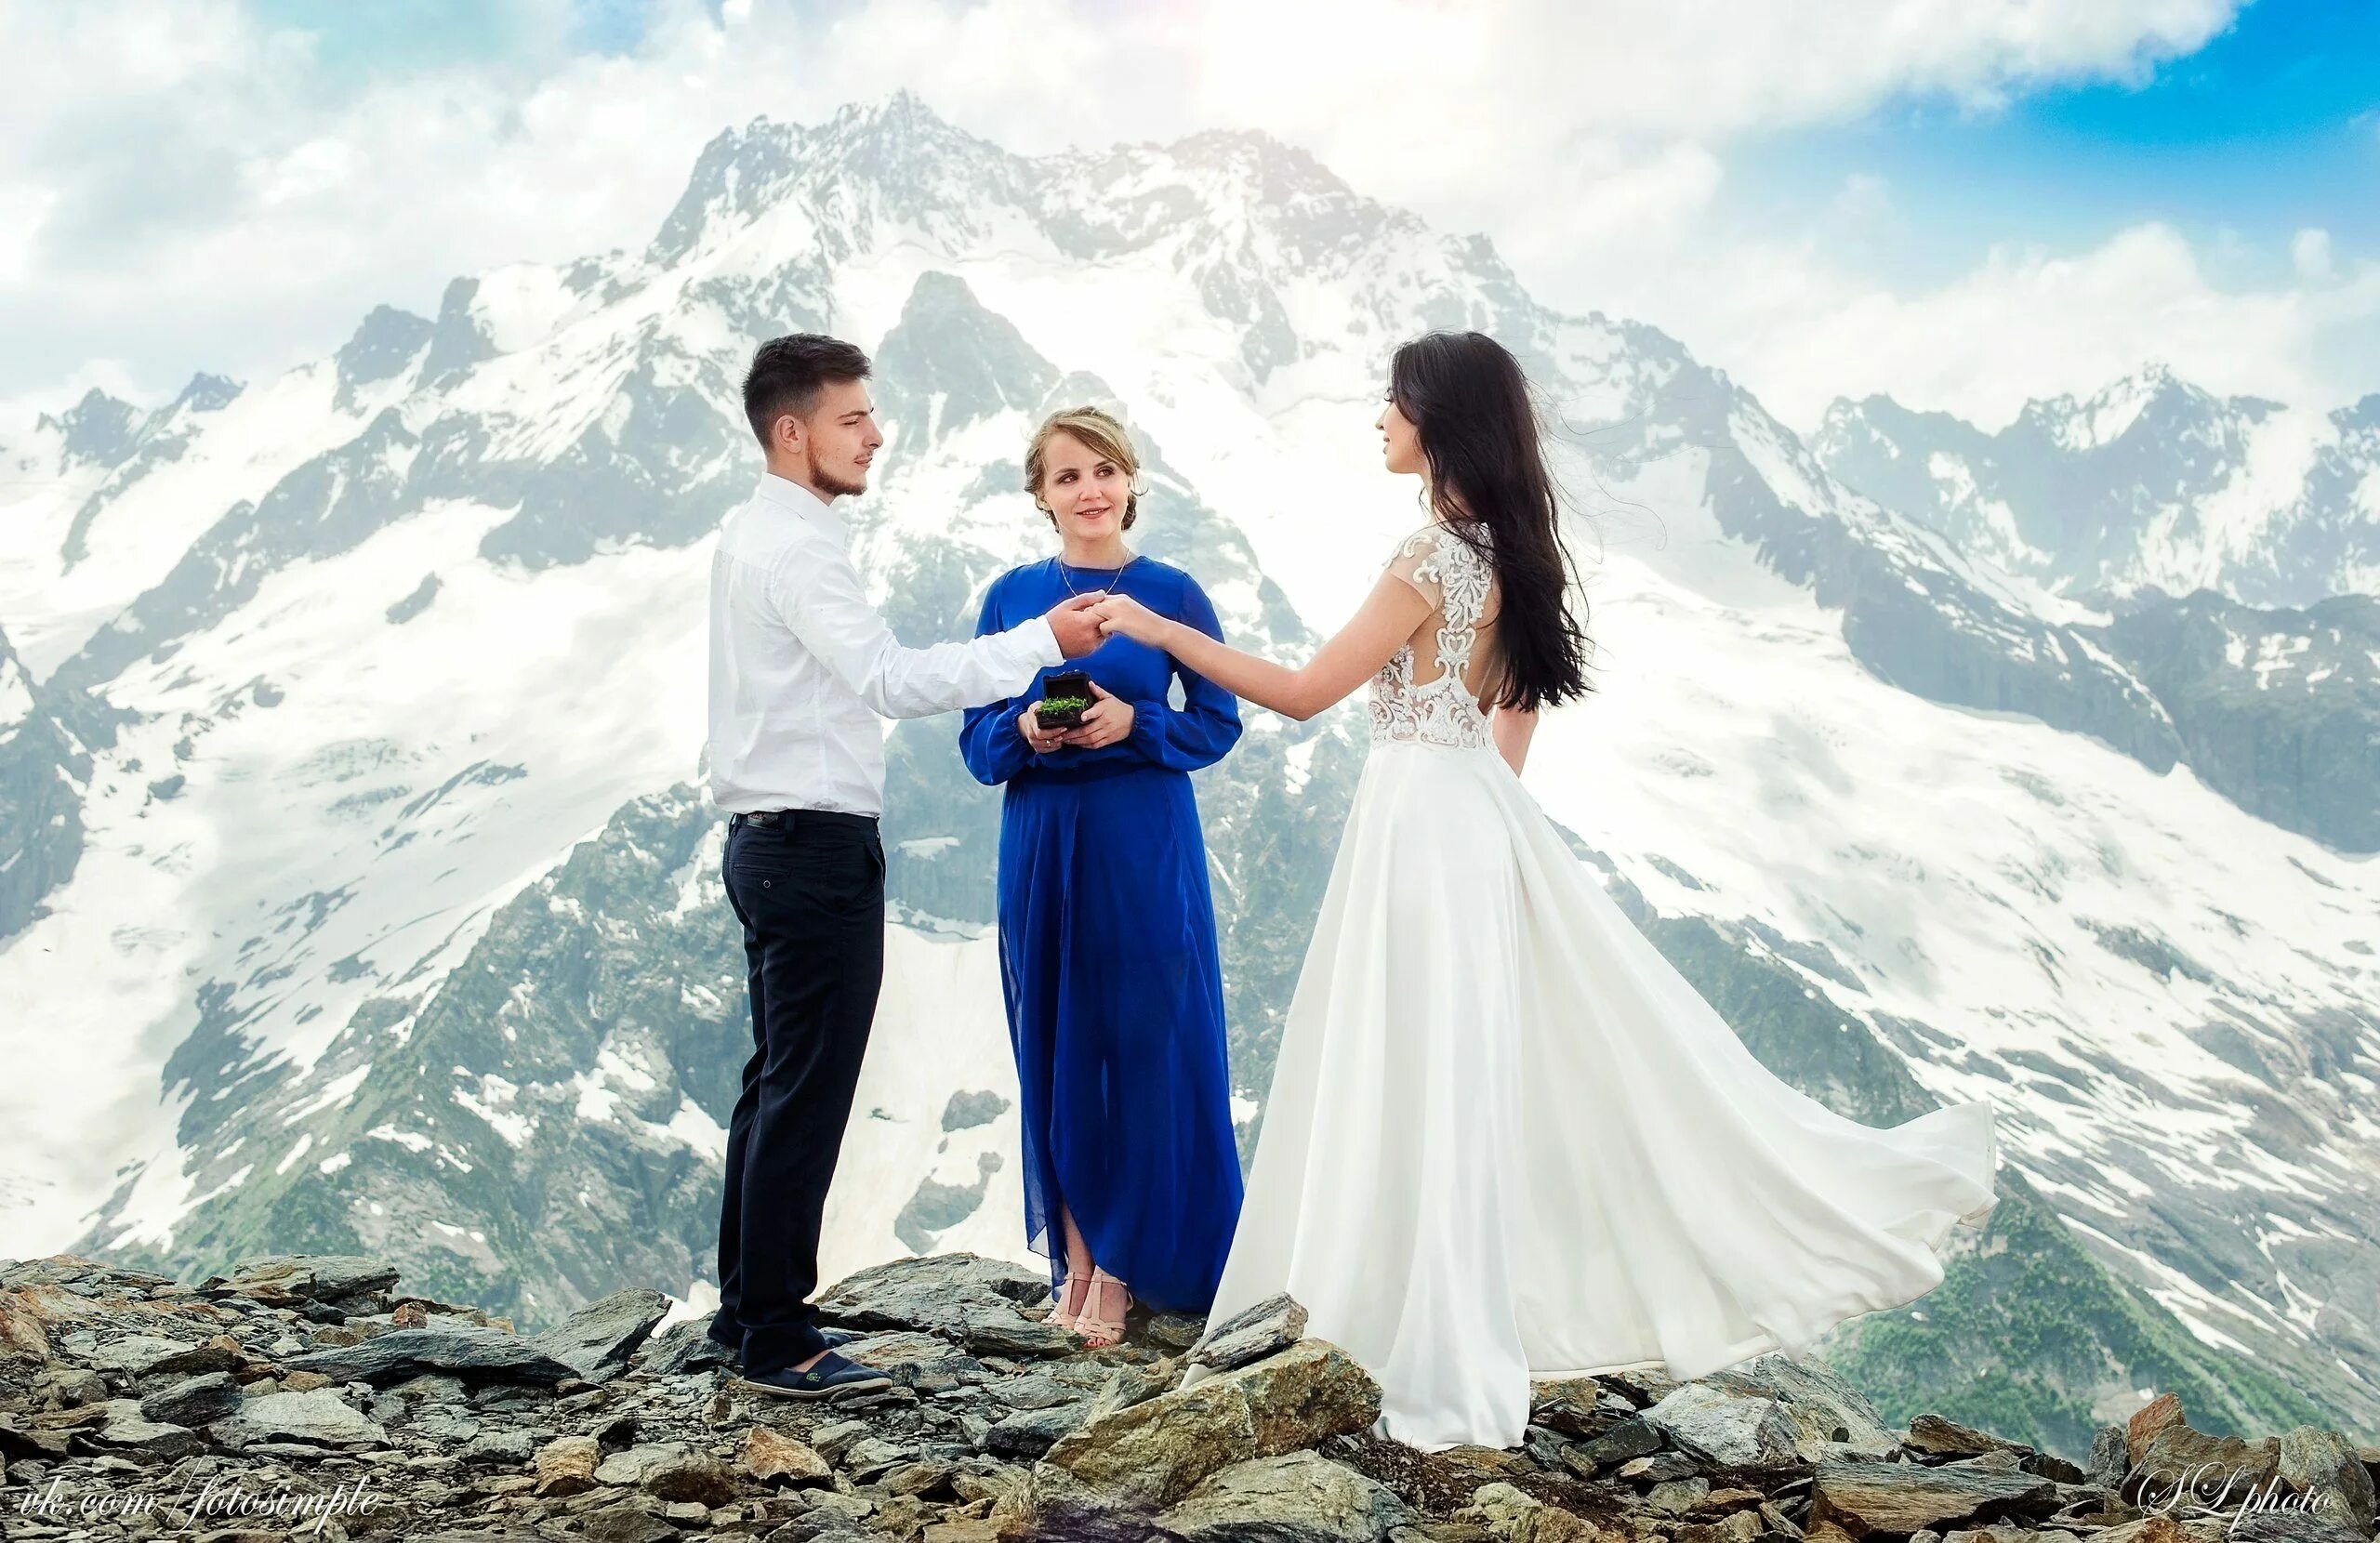 Свадьба на Эльбрусе. Свадьба Домбай Домбай в горах. Свадьба в горах Кавказа Эльбрус. Свадьба в Домбае. Женихи кавказа